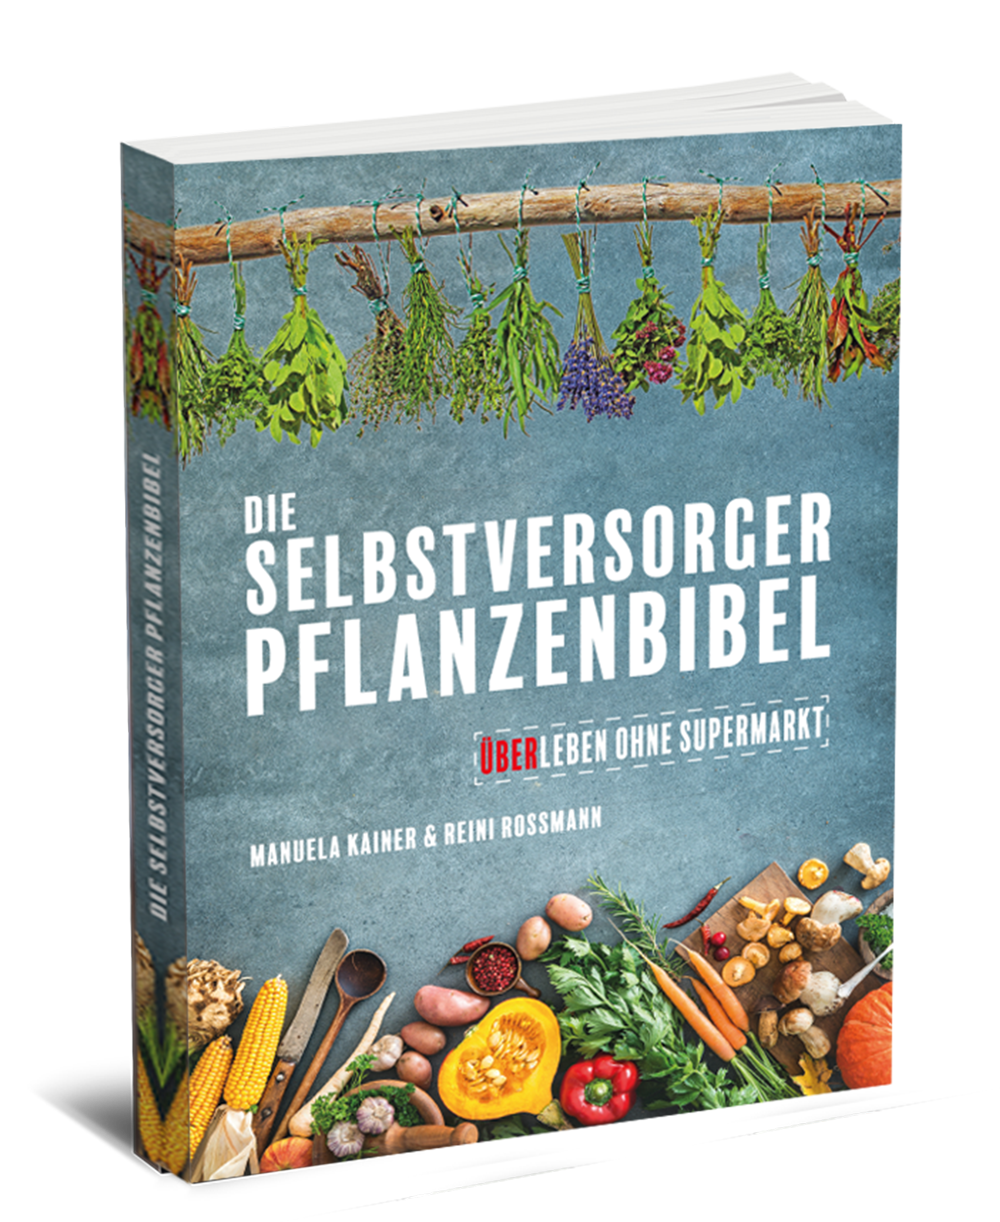 Selbstversorger Pflanzenbibel Reini Rossmann Survival Shop